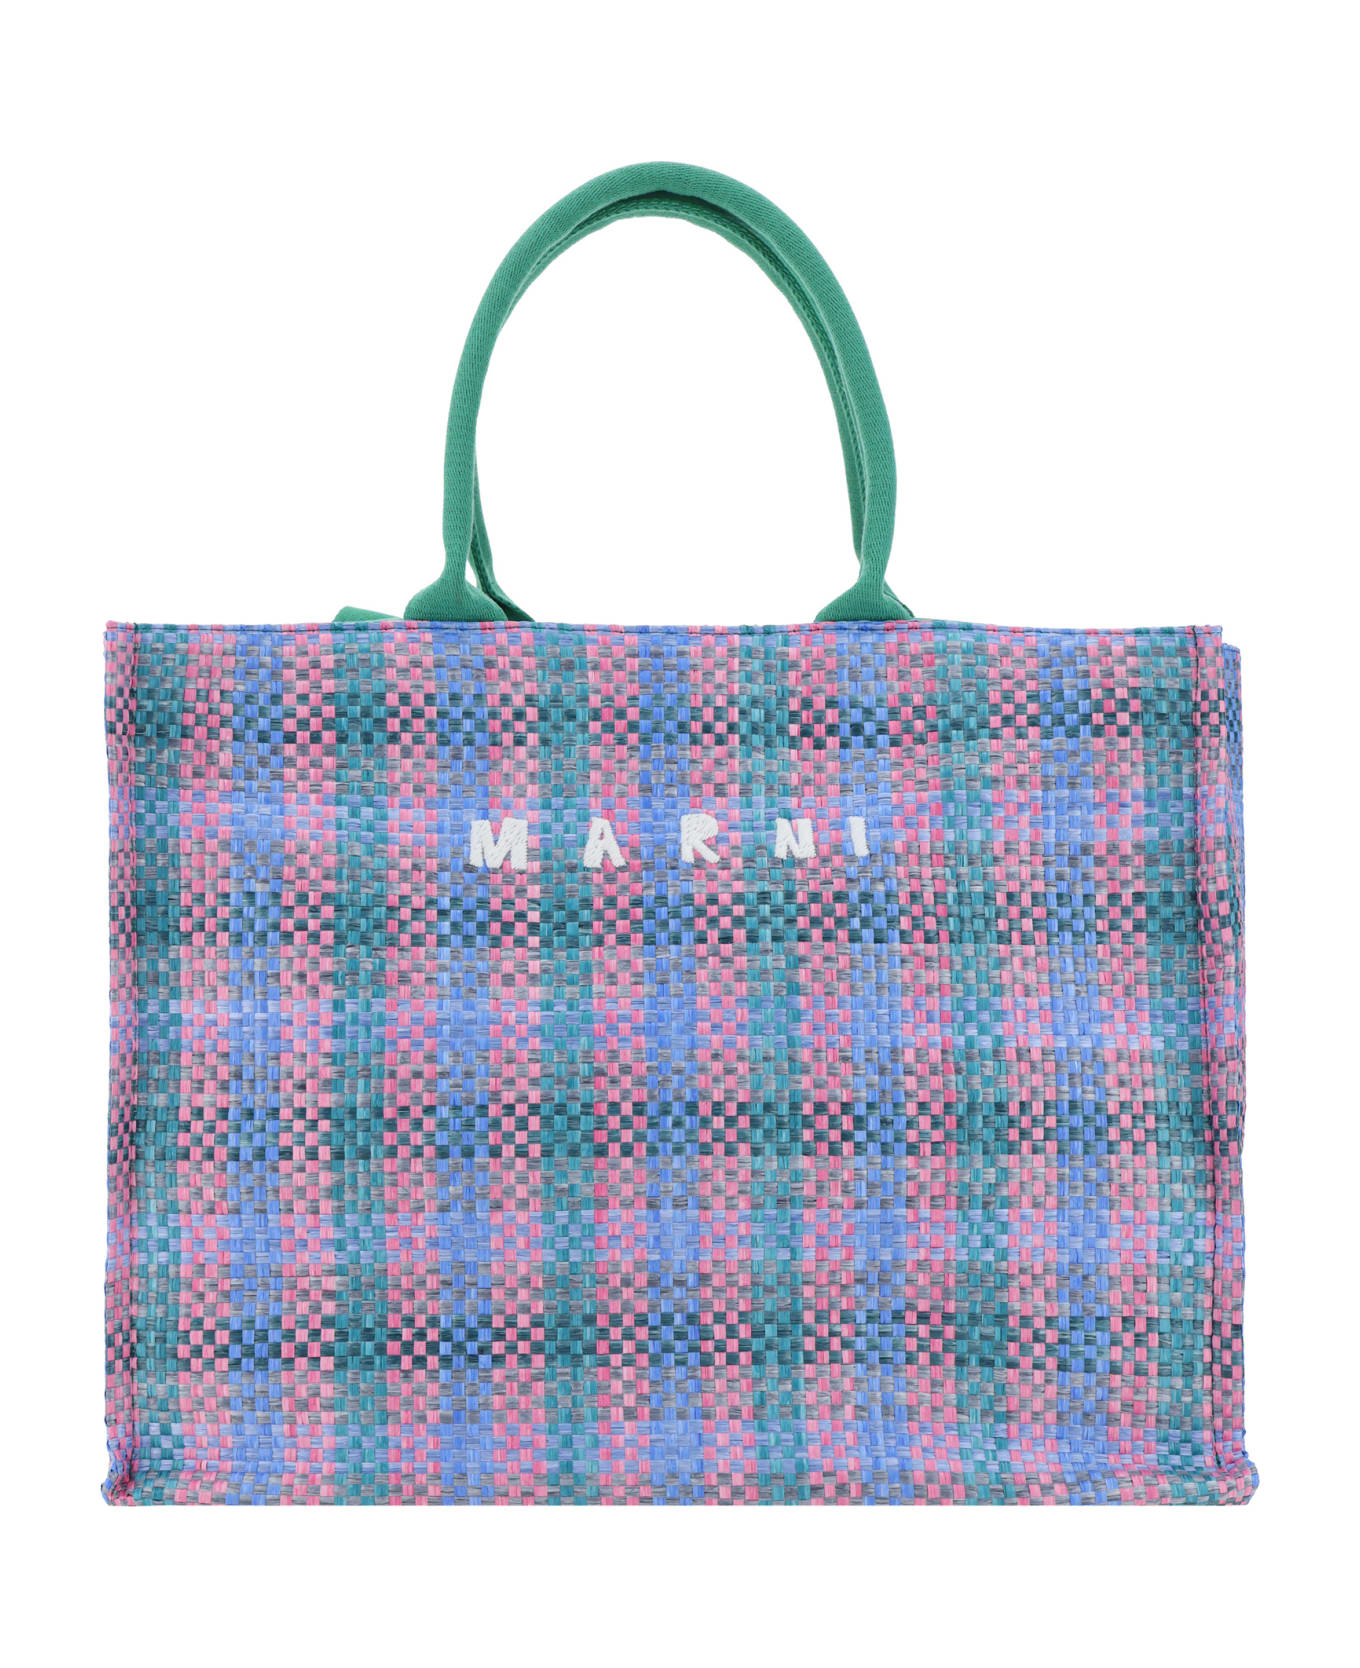 Marni Handbag - Green/fuchsia/cypress